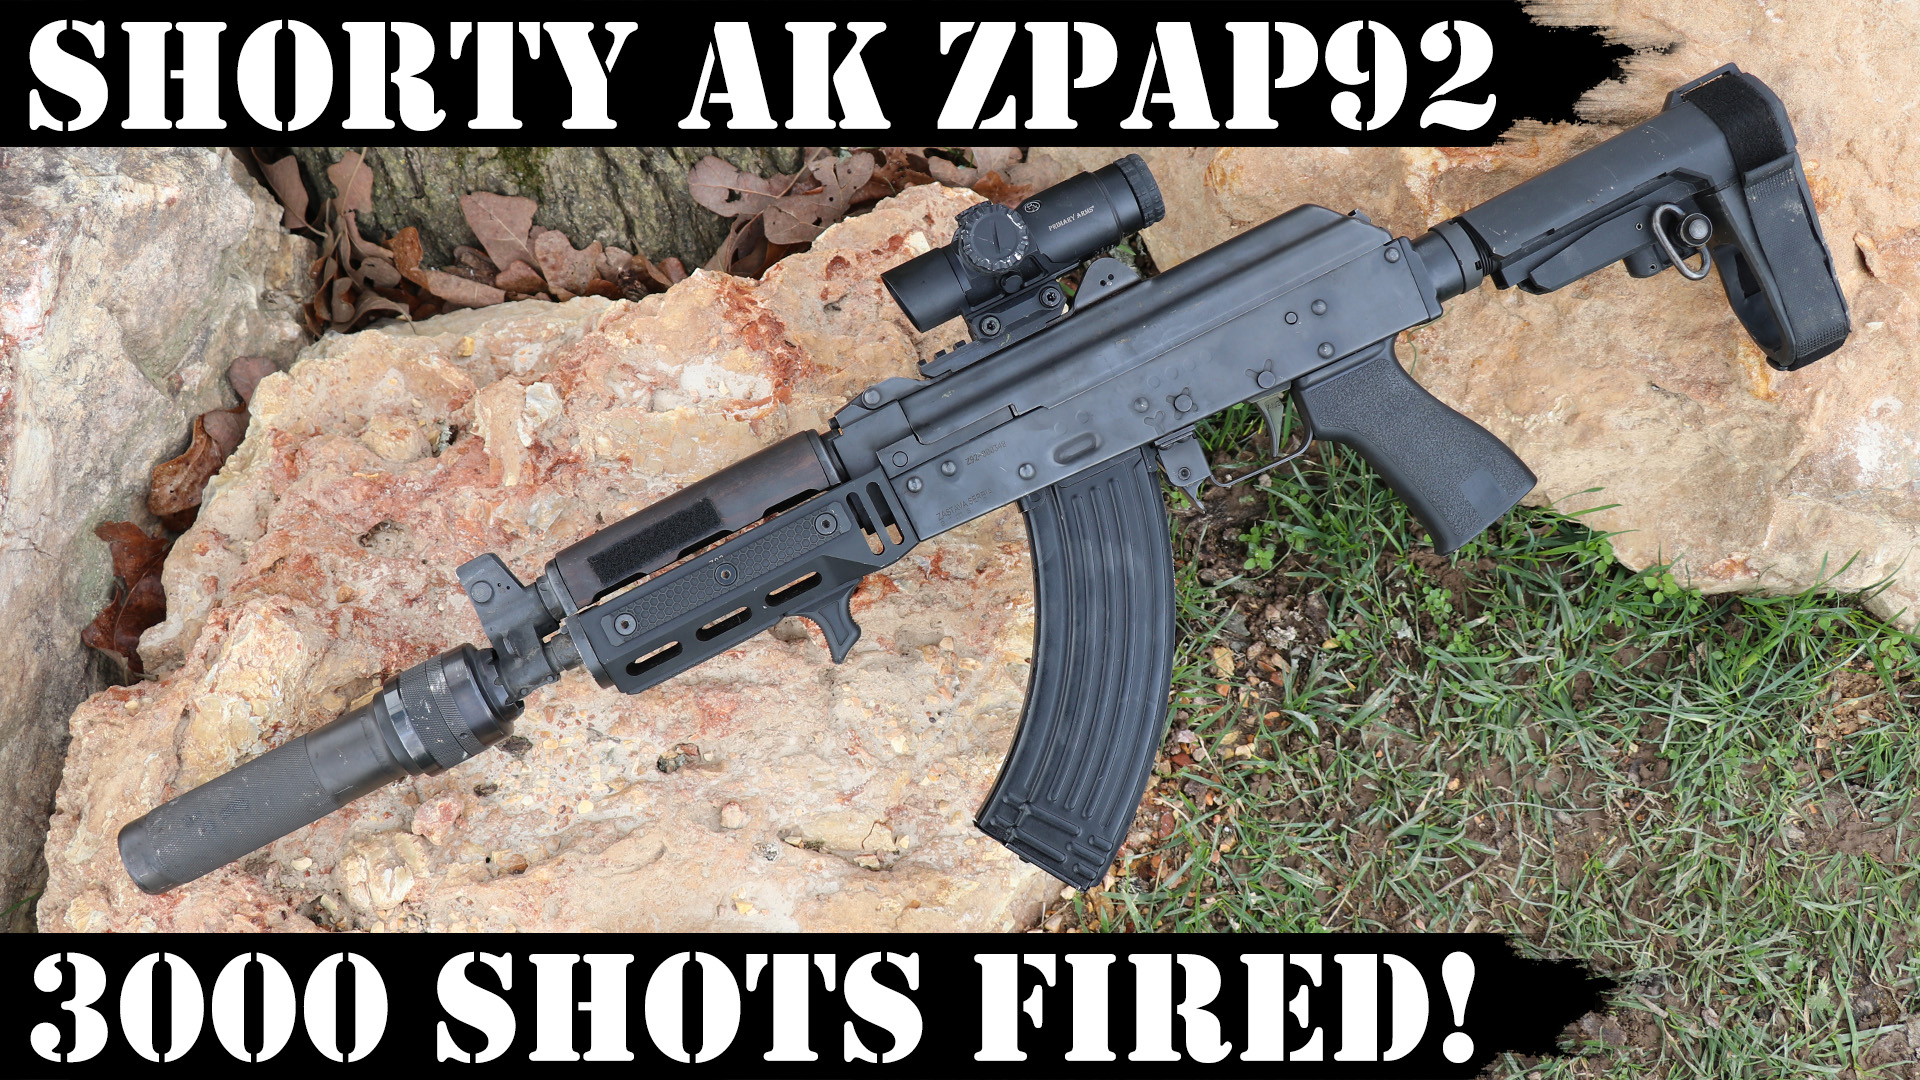 Shorty AK: ZPAP 92 – 3,000 Shots Fired!